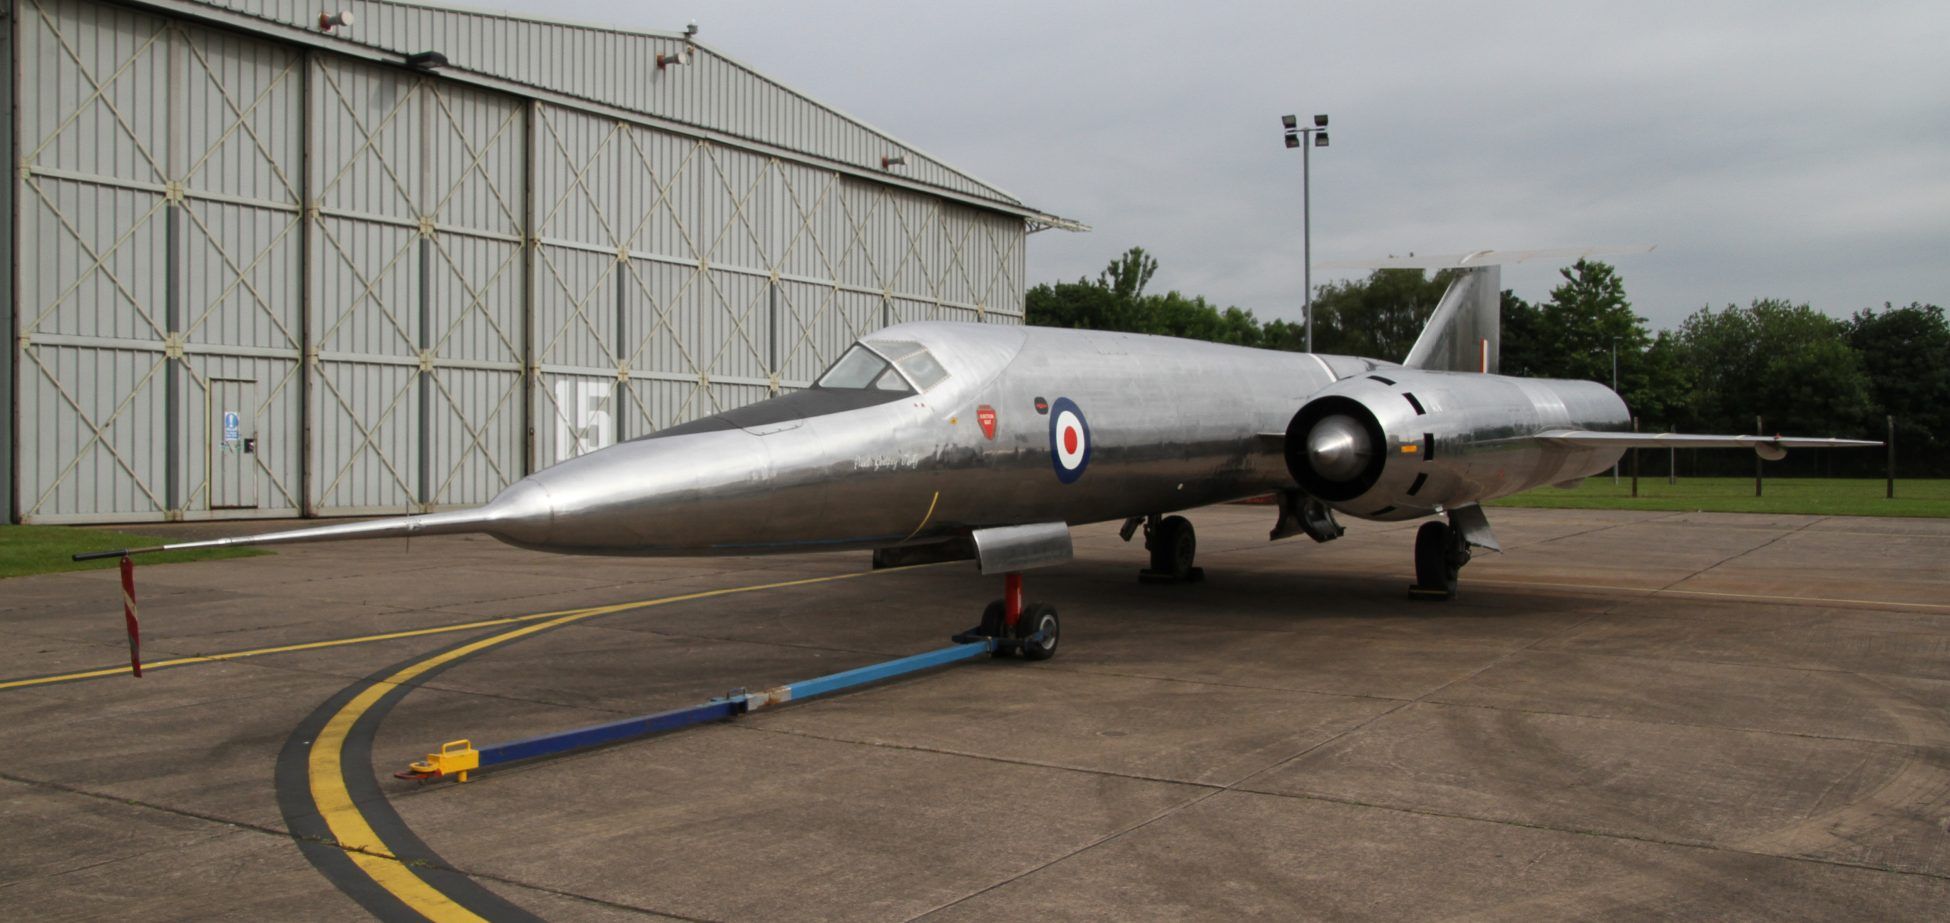 Bristol 188 Fighter Jet